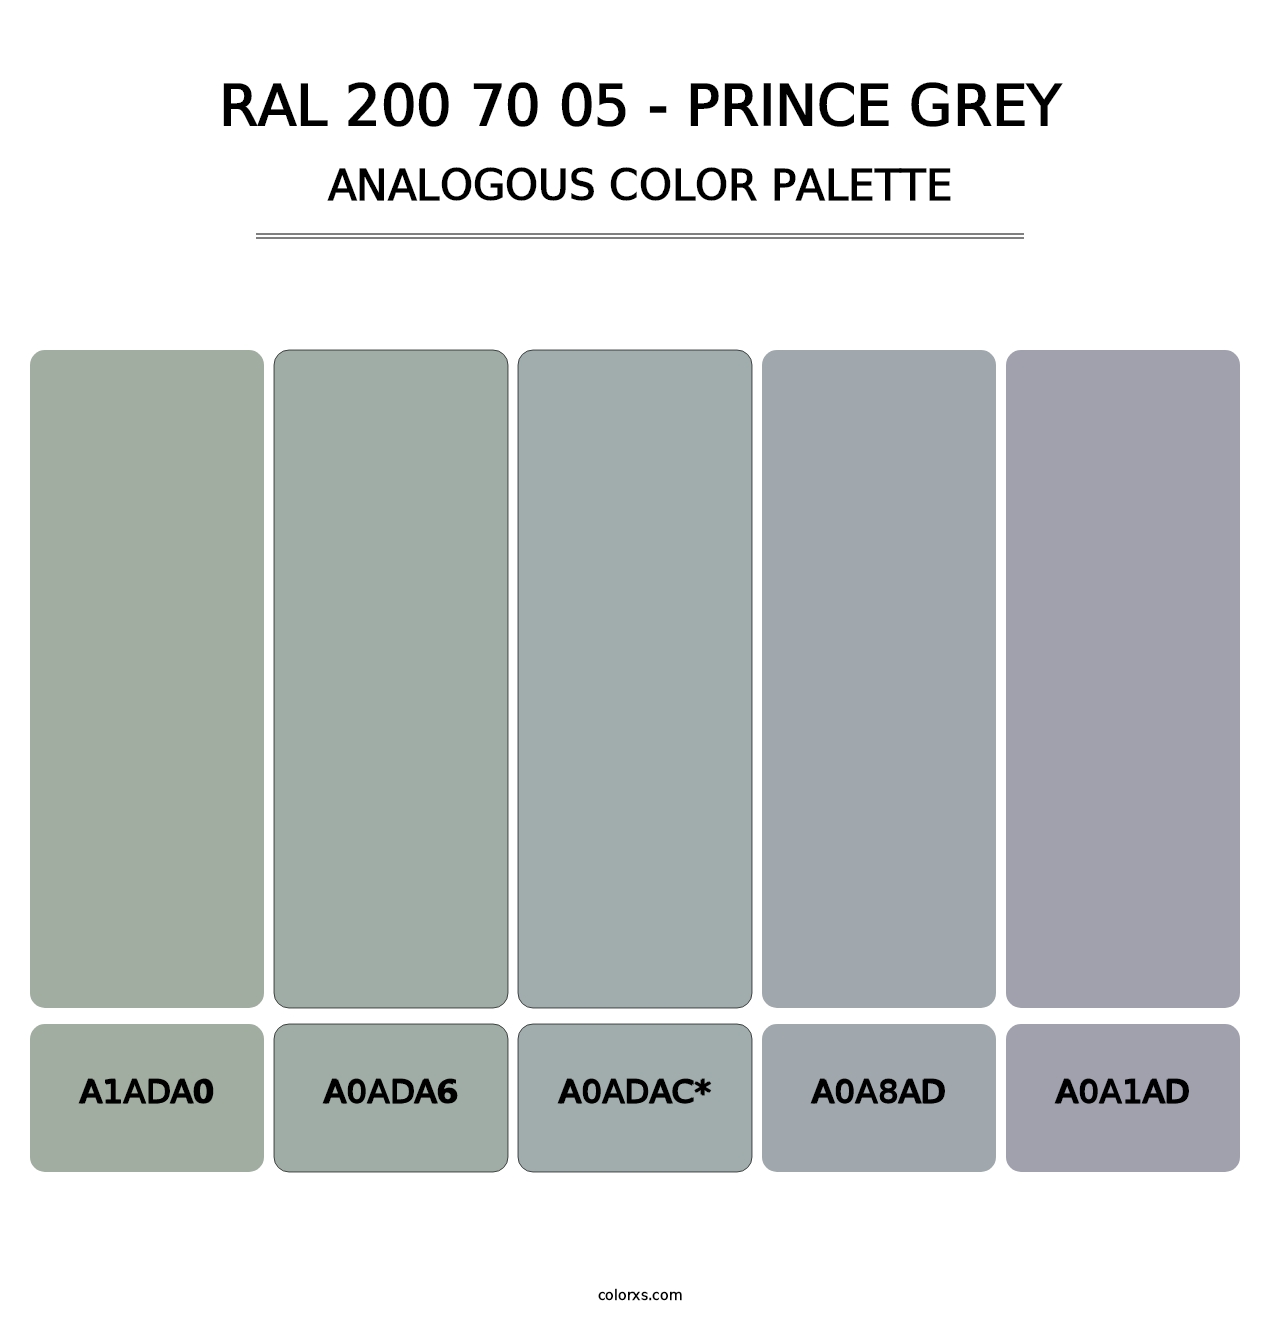 RAL 200 70 05 - Prince Grey - Analogous Color Palette